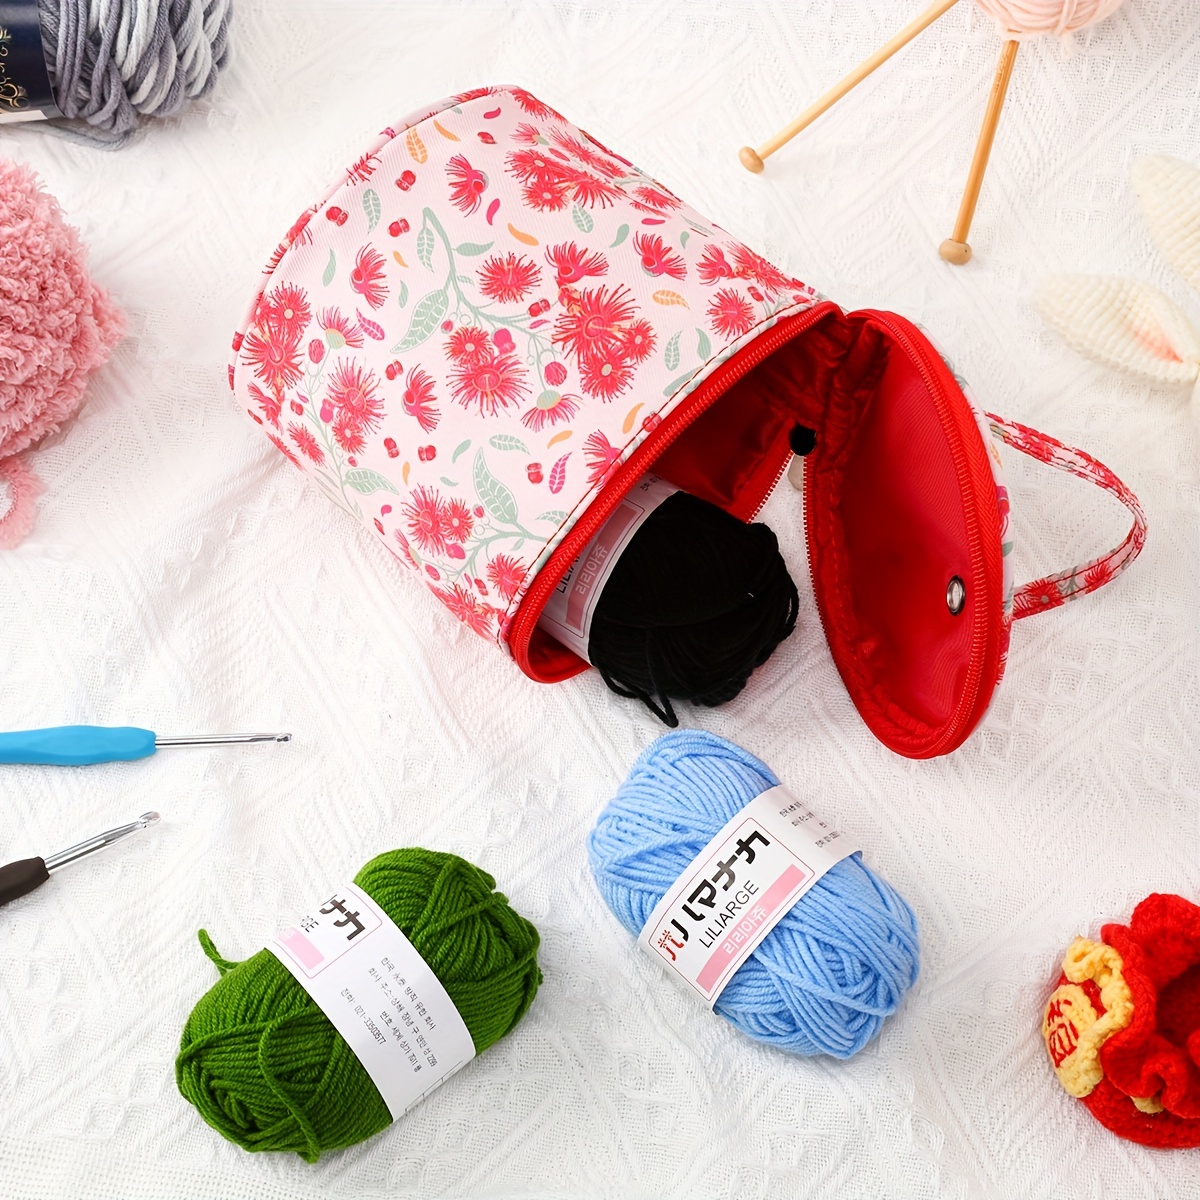 Knitting Bag for Traveling Yarn Holder Yarn Storage Bag for